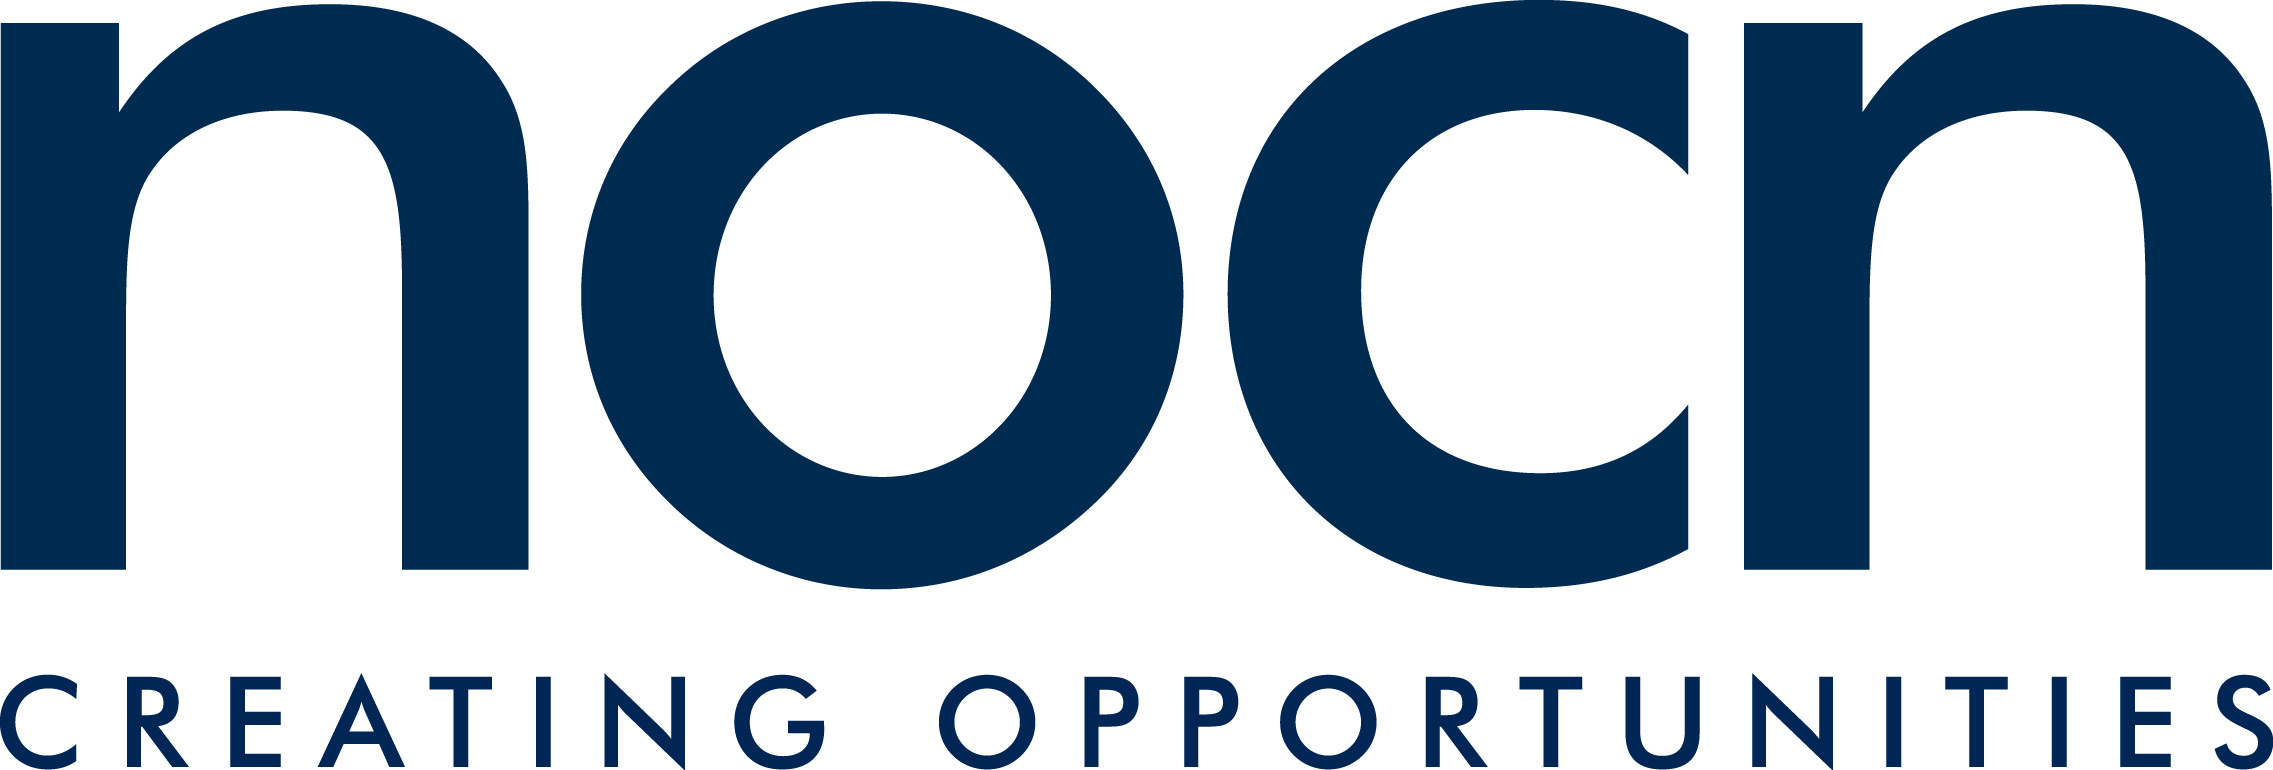 NOCN Logo